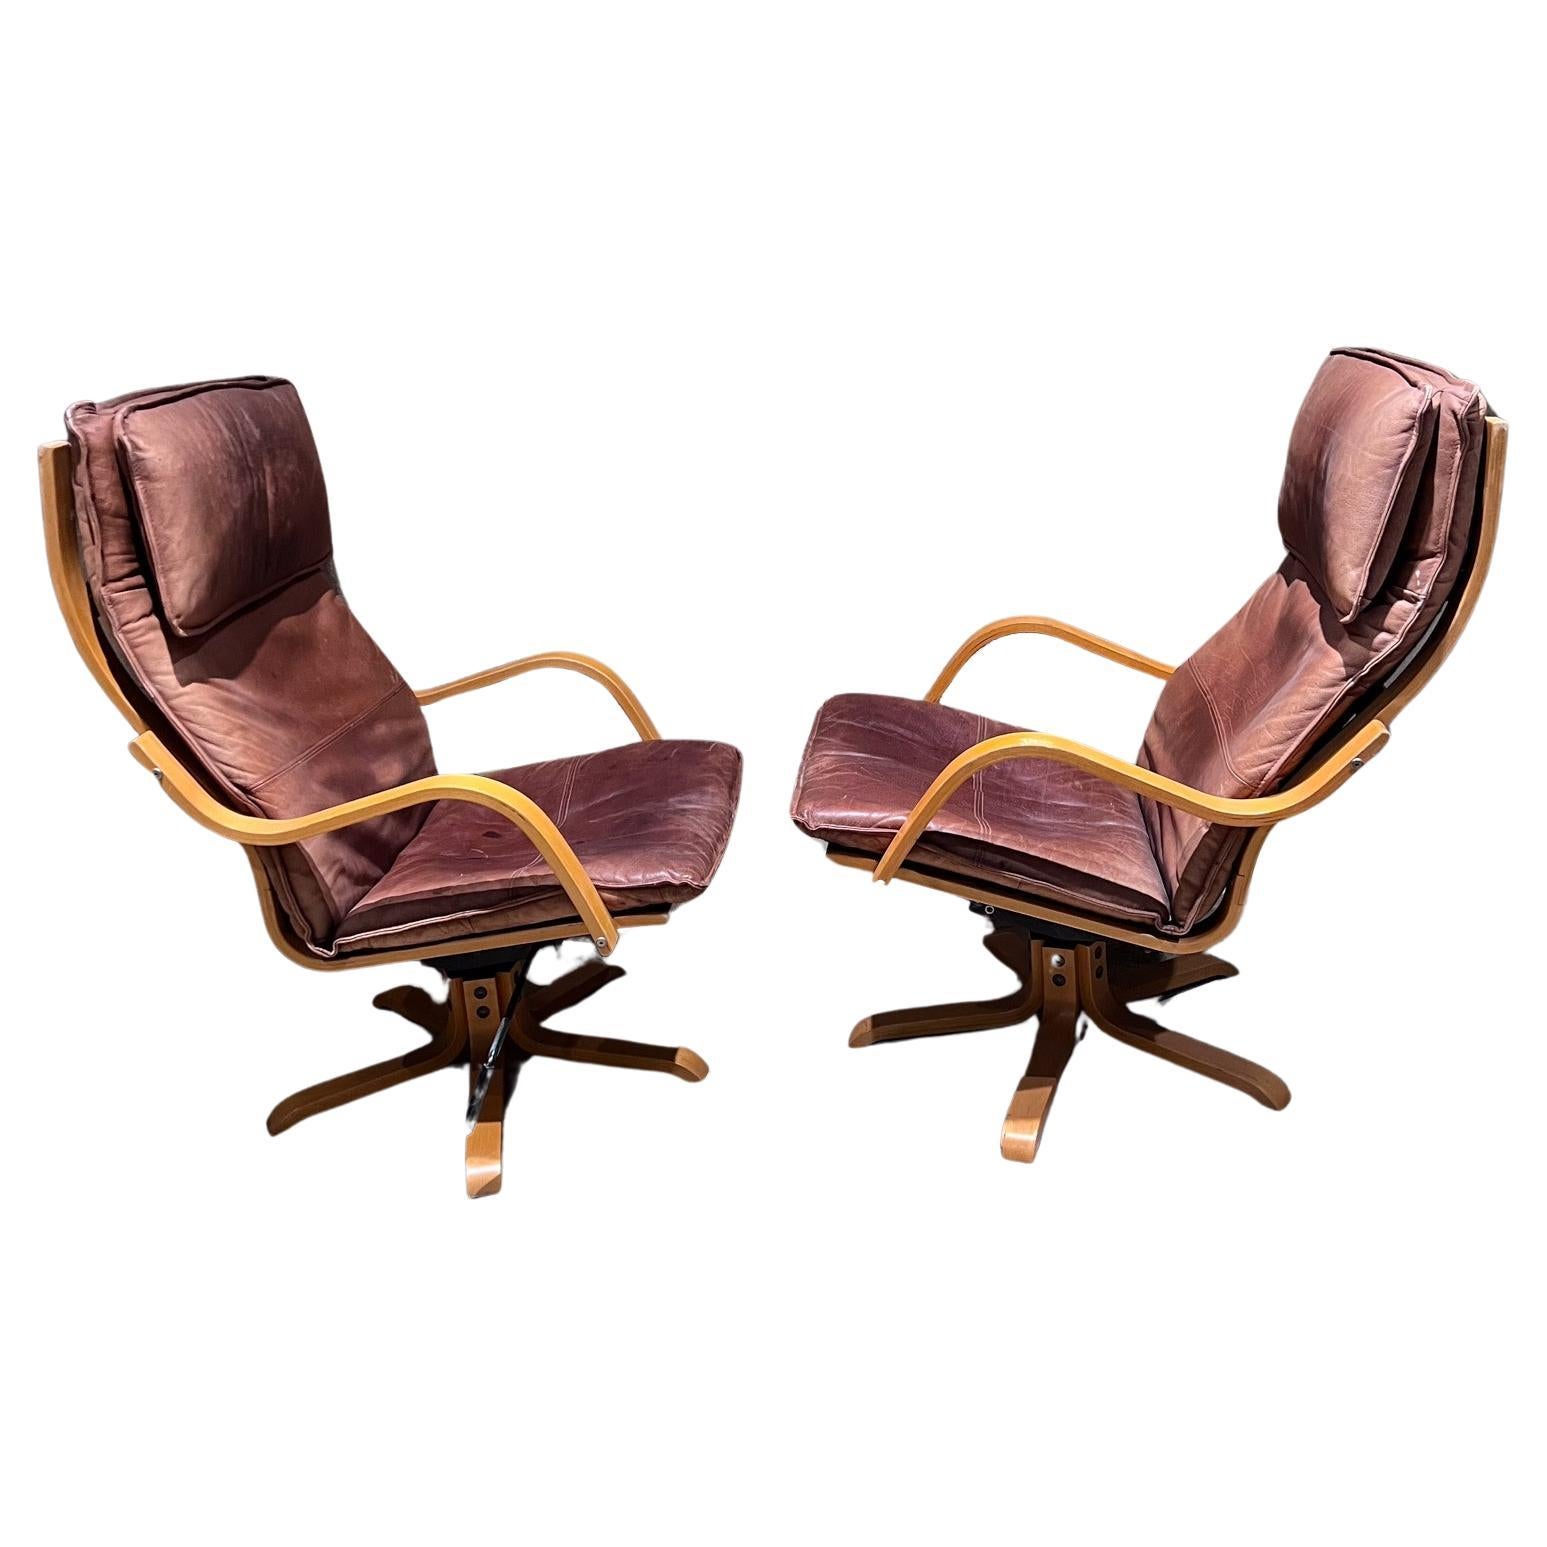 1960s Italian Swiss Leather Tall Padded Lounge Chairs